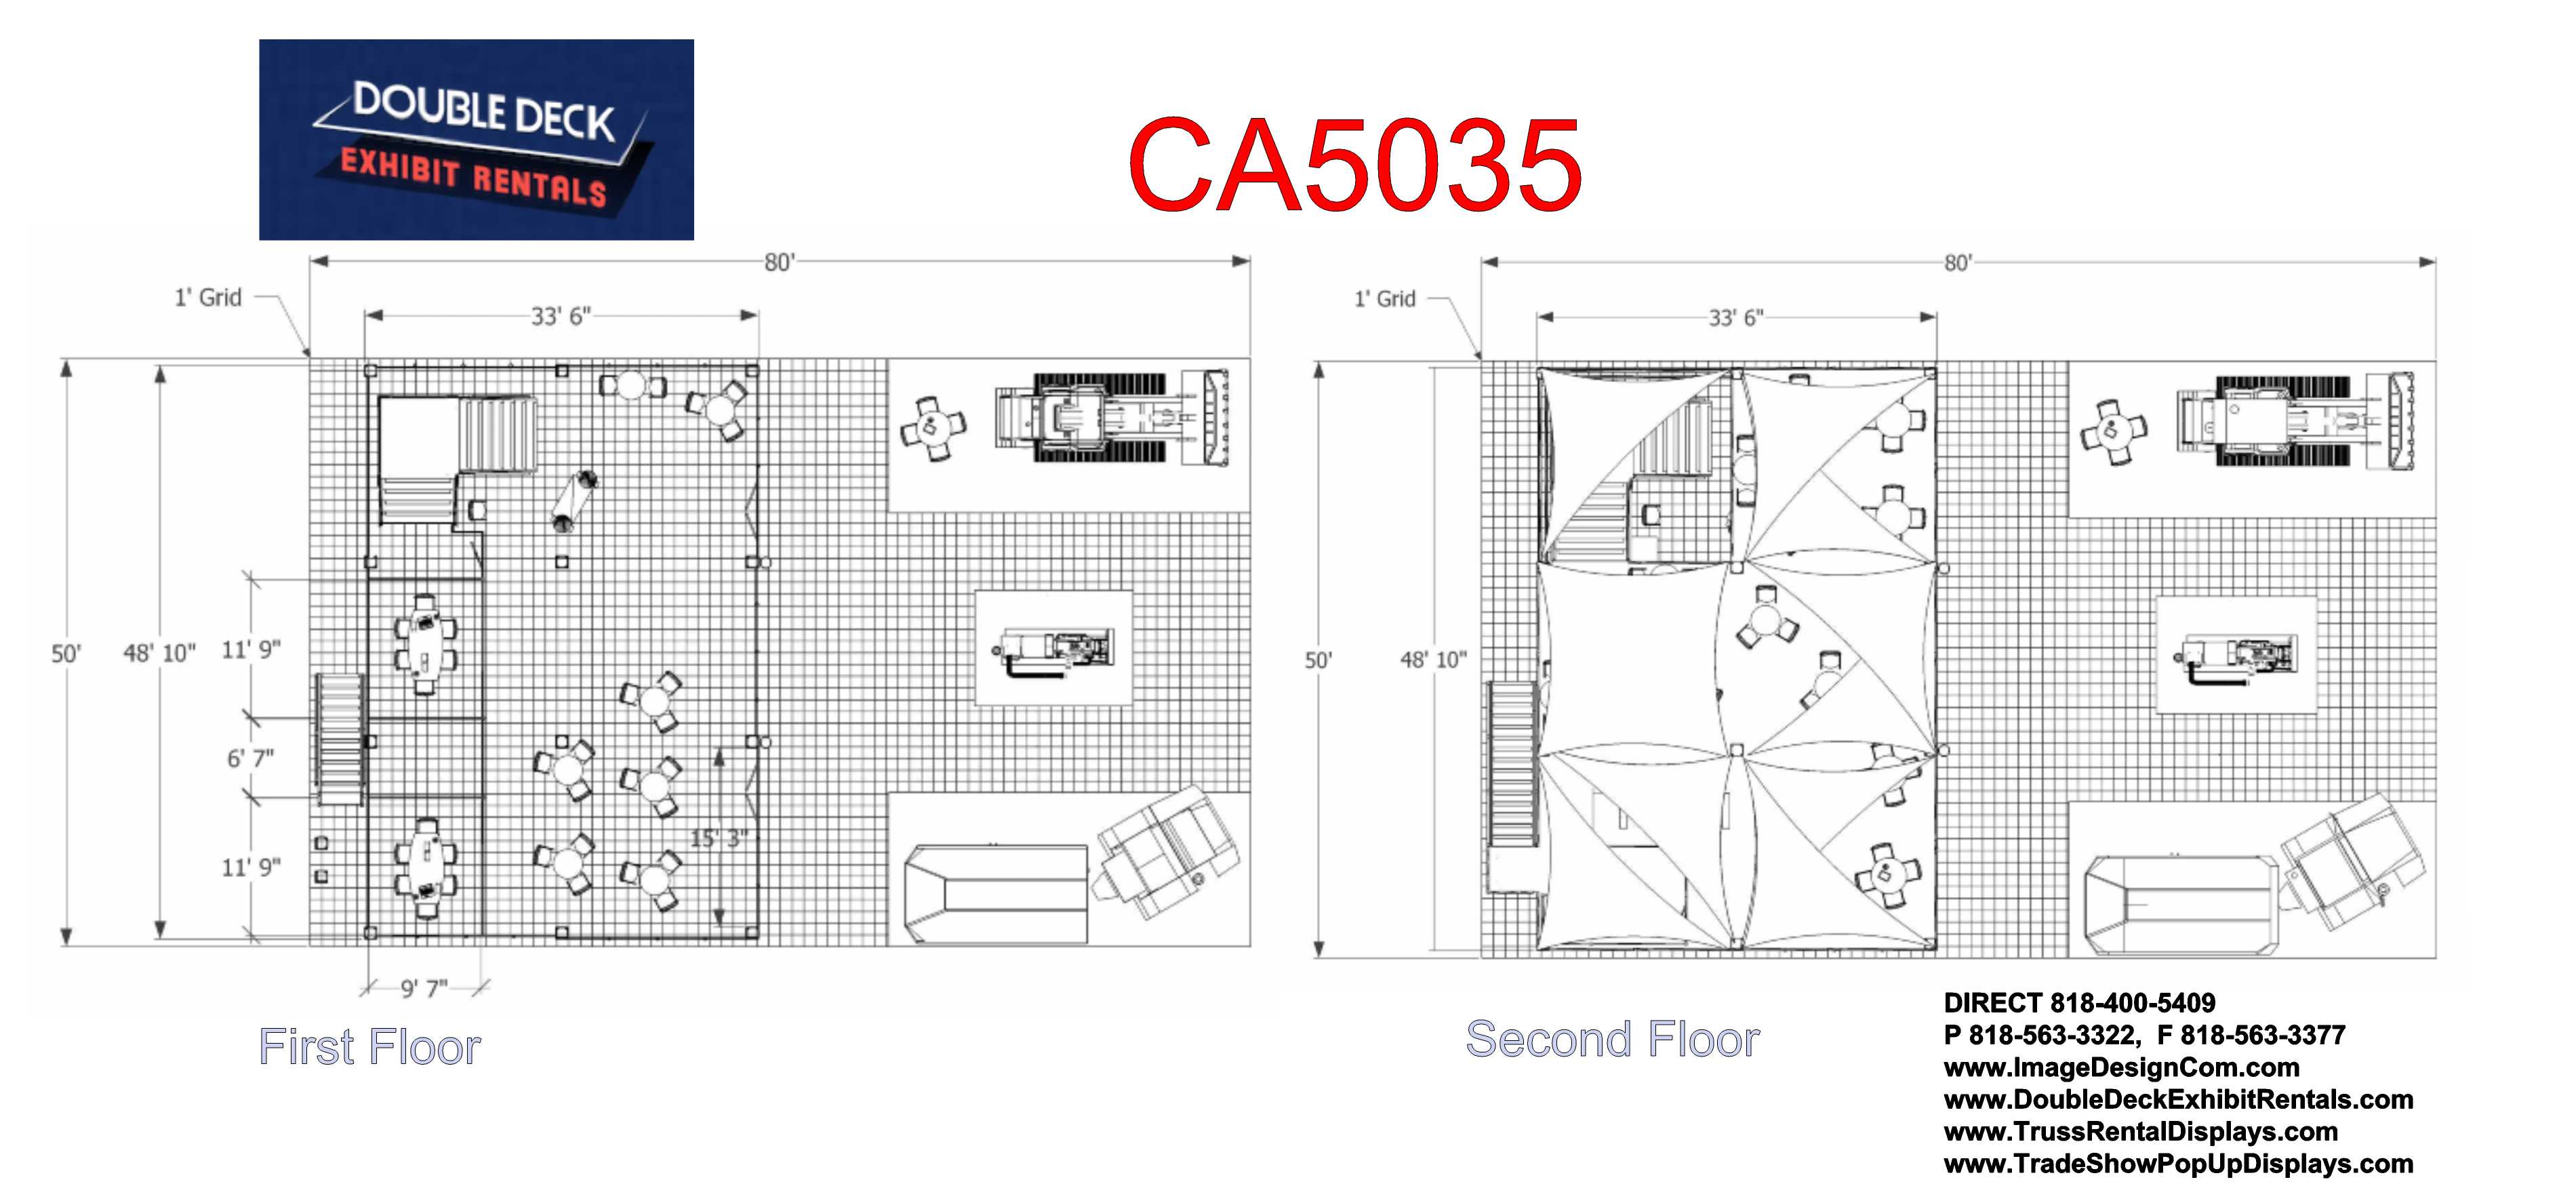 CA5035 floor plan - large multistory trade show exhibit rental